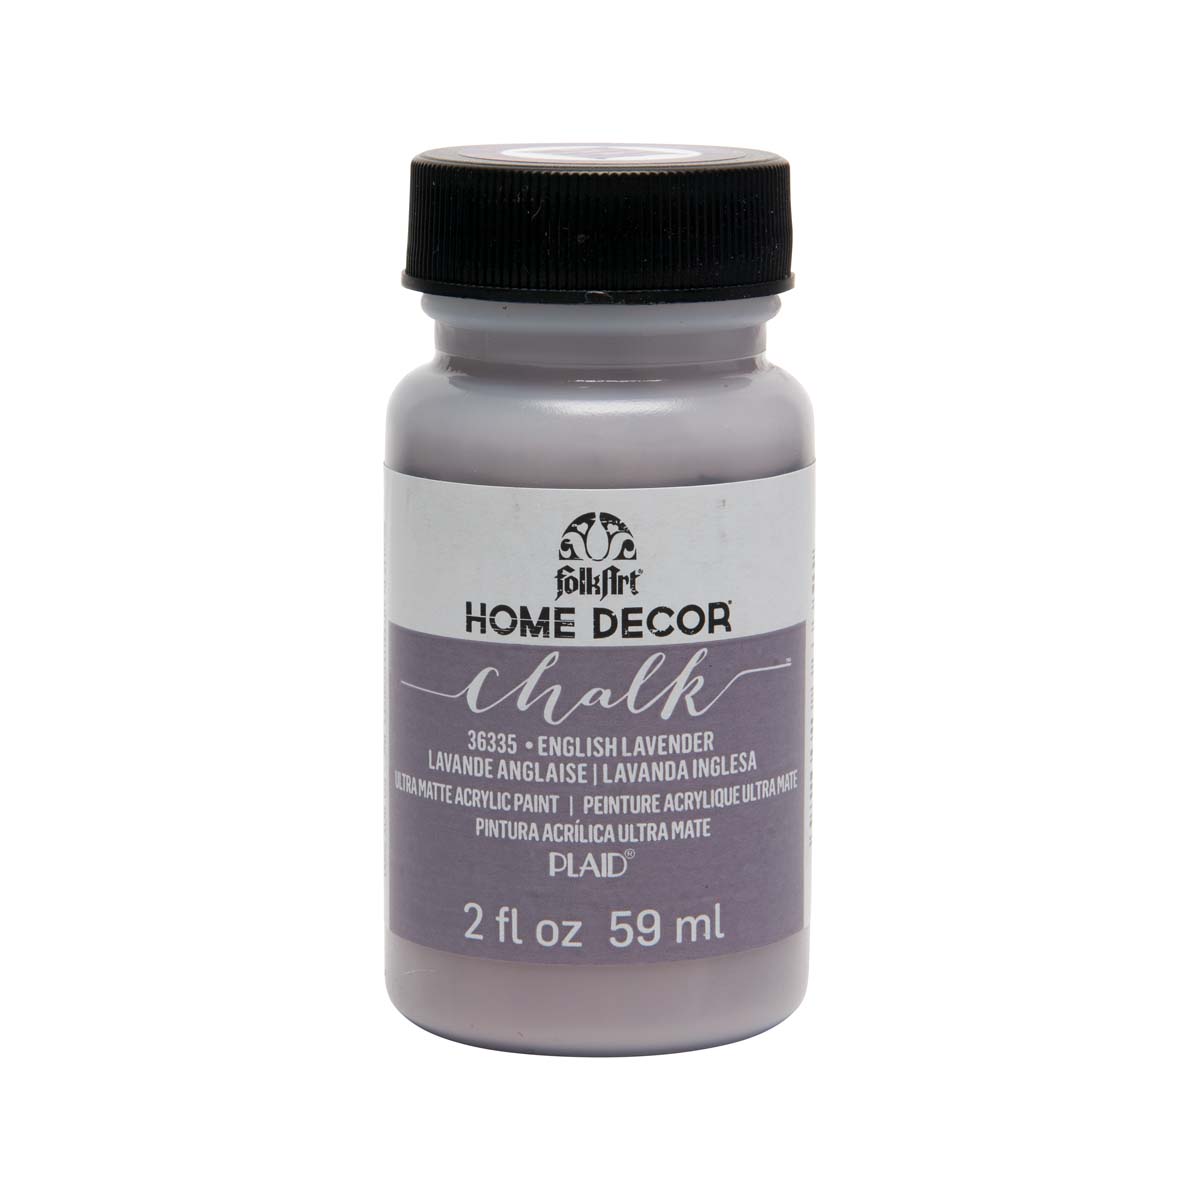 FolkArt Home Decor Chalk - English Lavender, 2 oz. - 36335